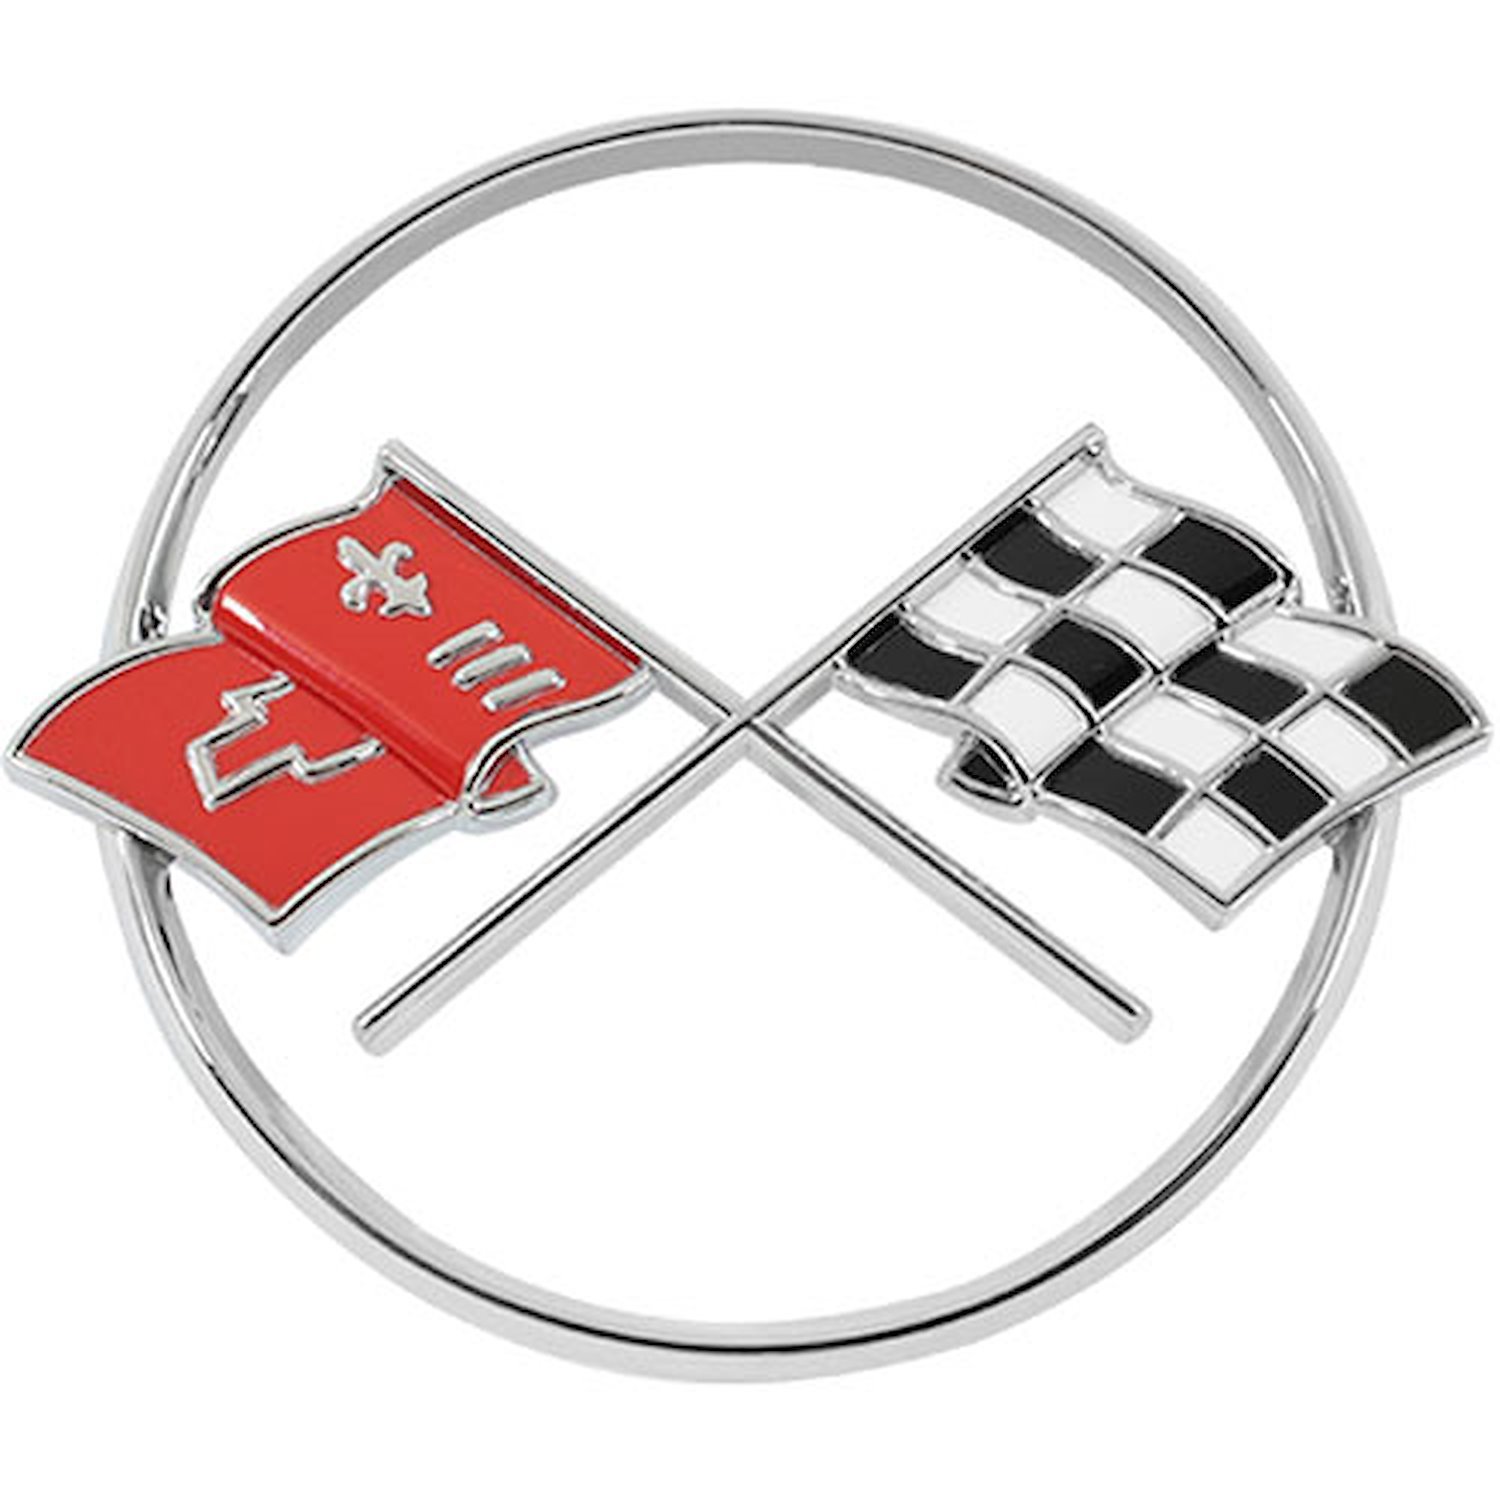 Nose Emblem 1962 Chevy Corvette